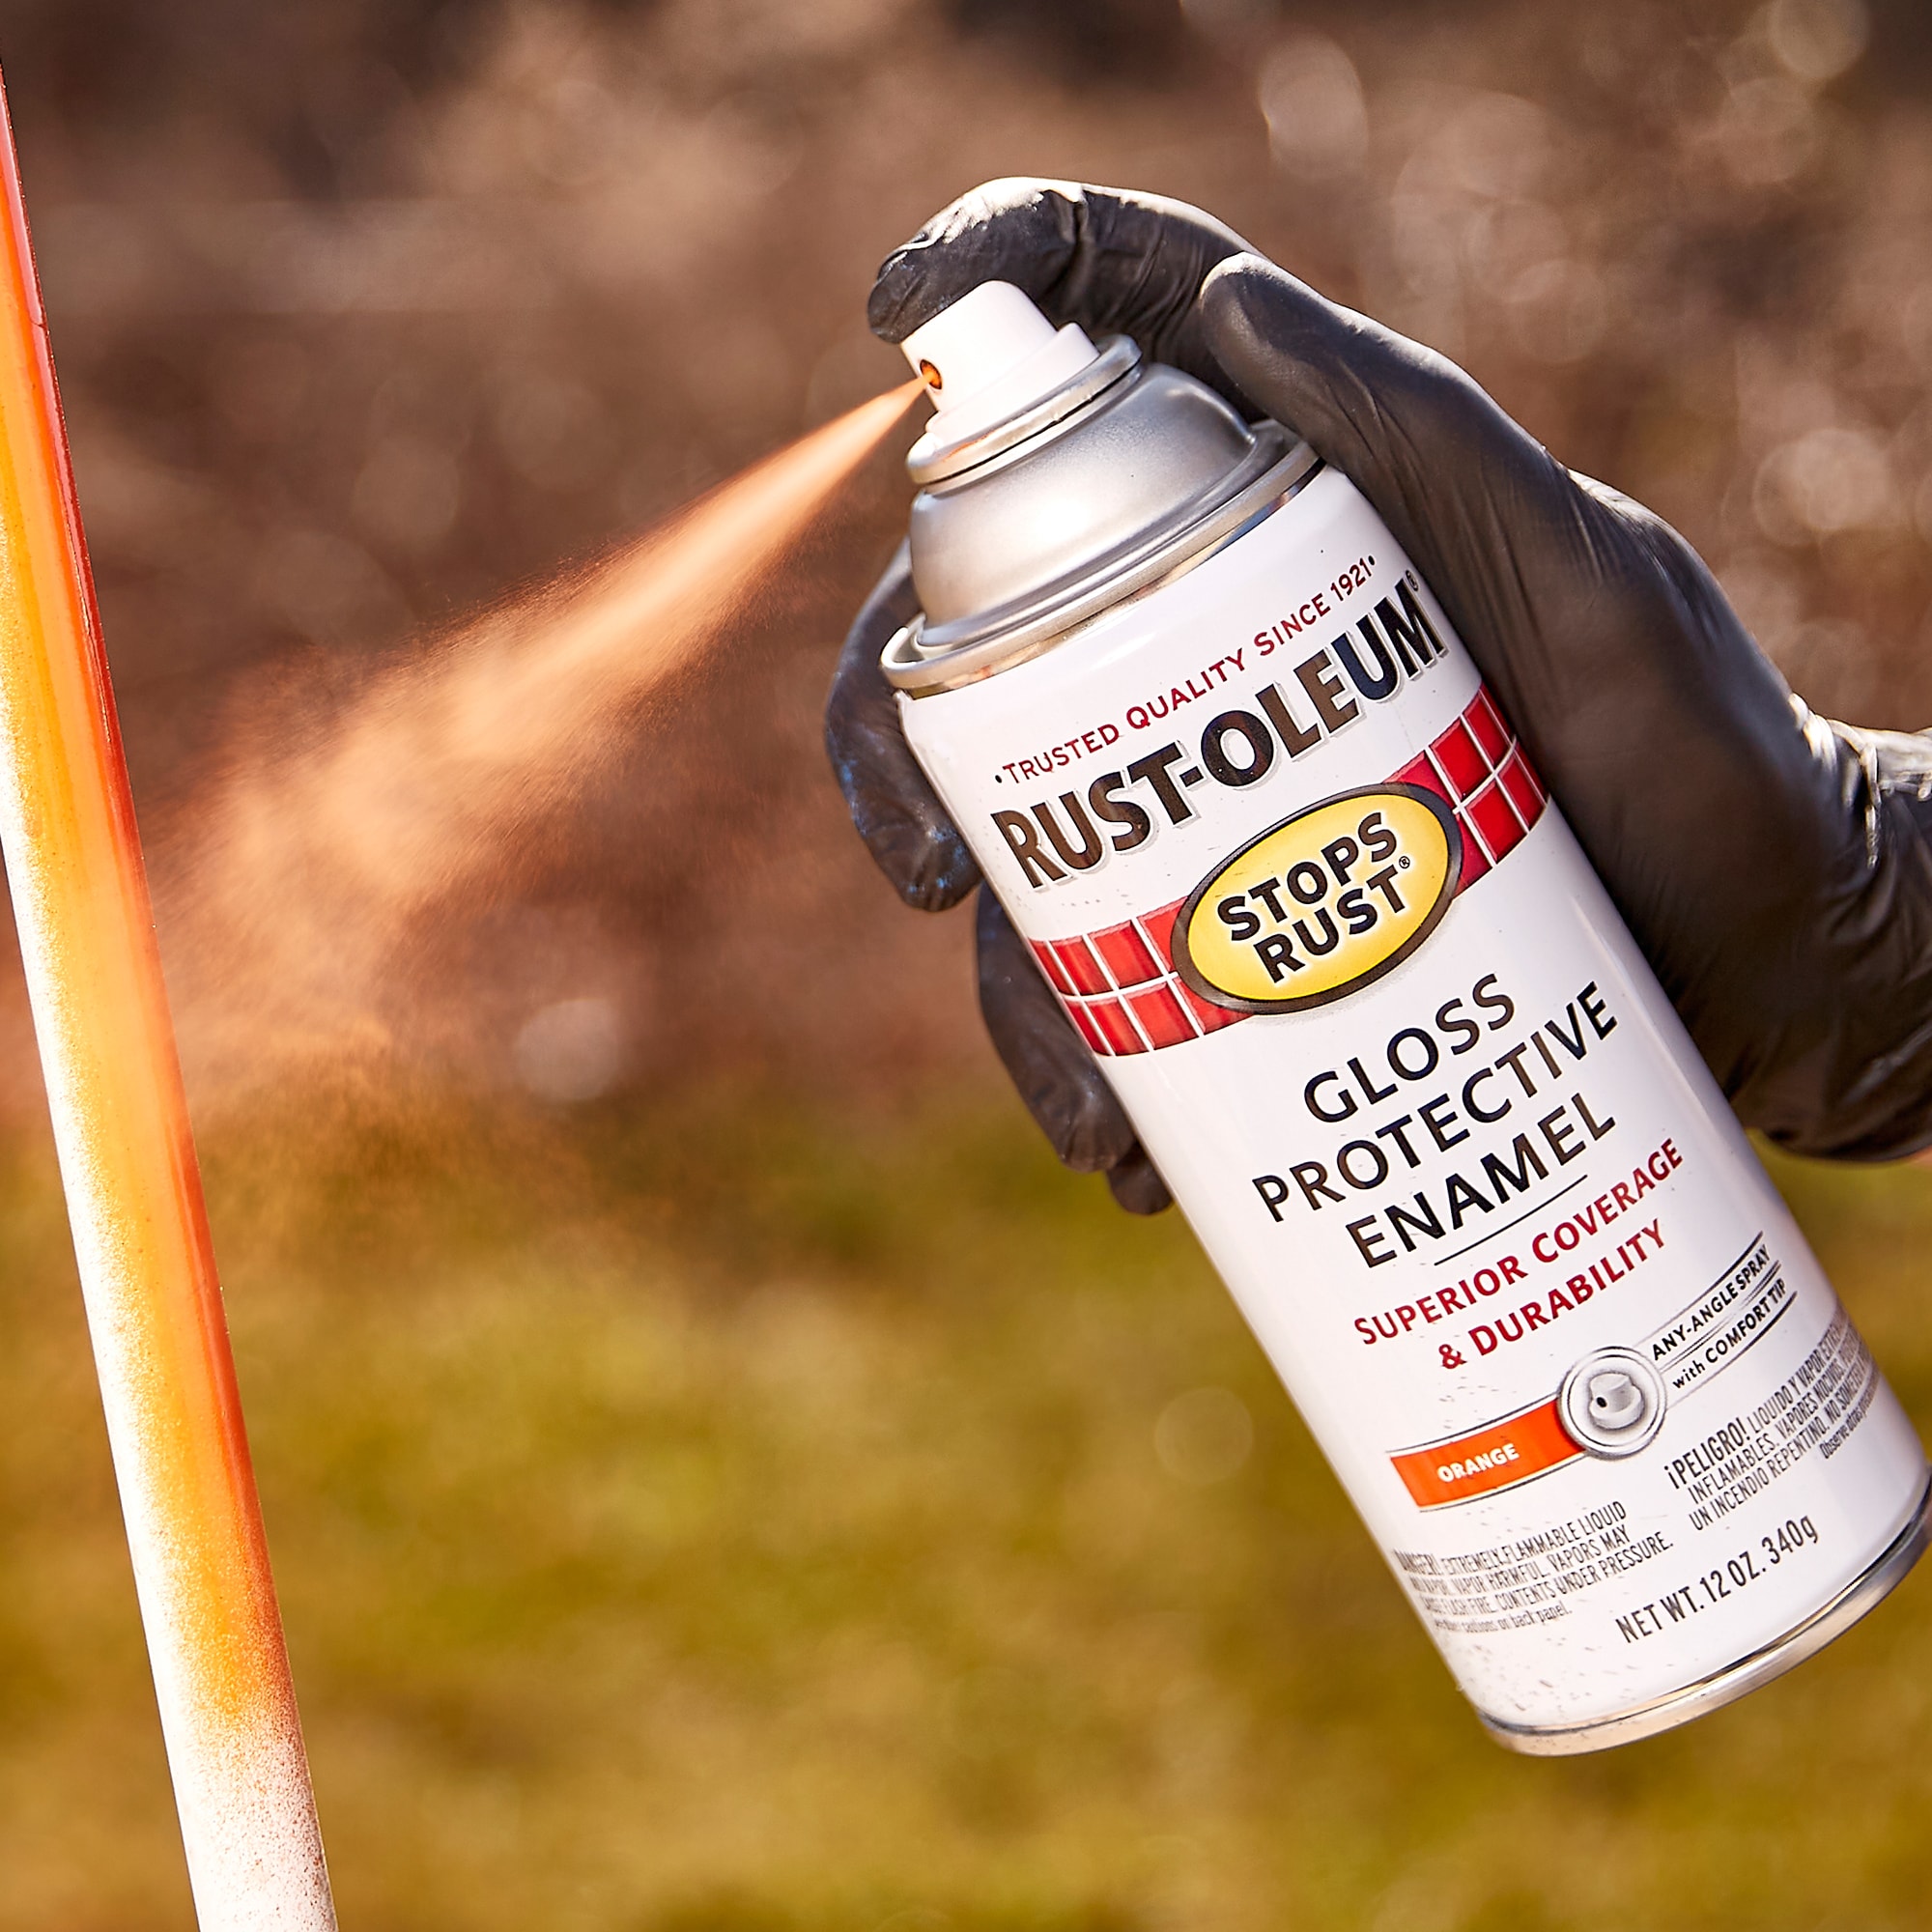 Rust-Oleum Stops Rust 12 oz. Protective Enamel Gloss Orange Spray Paint (6-pack)